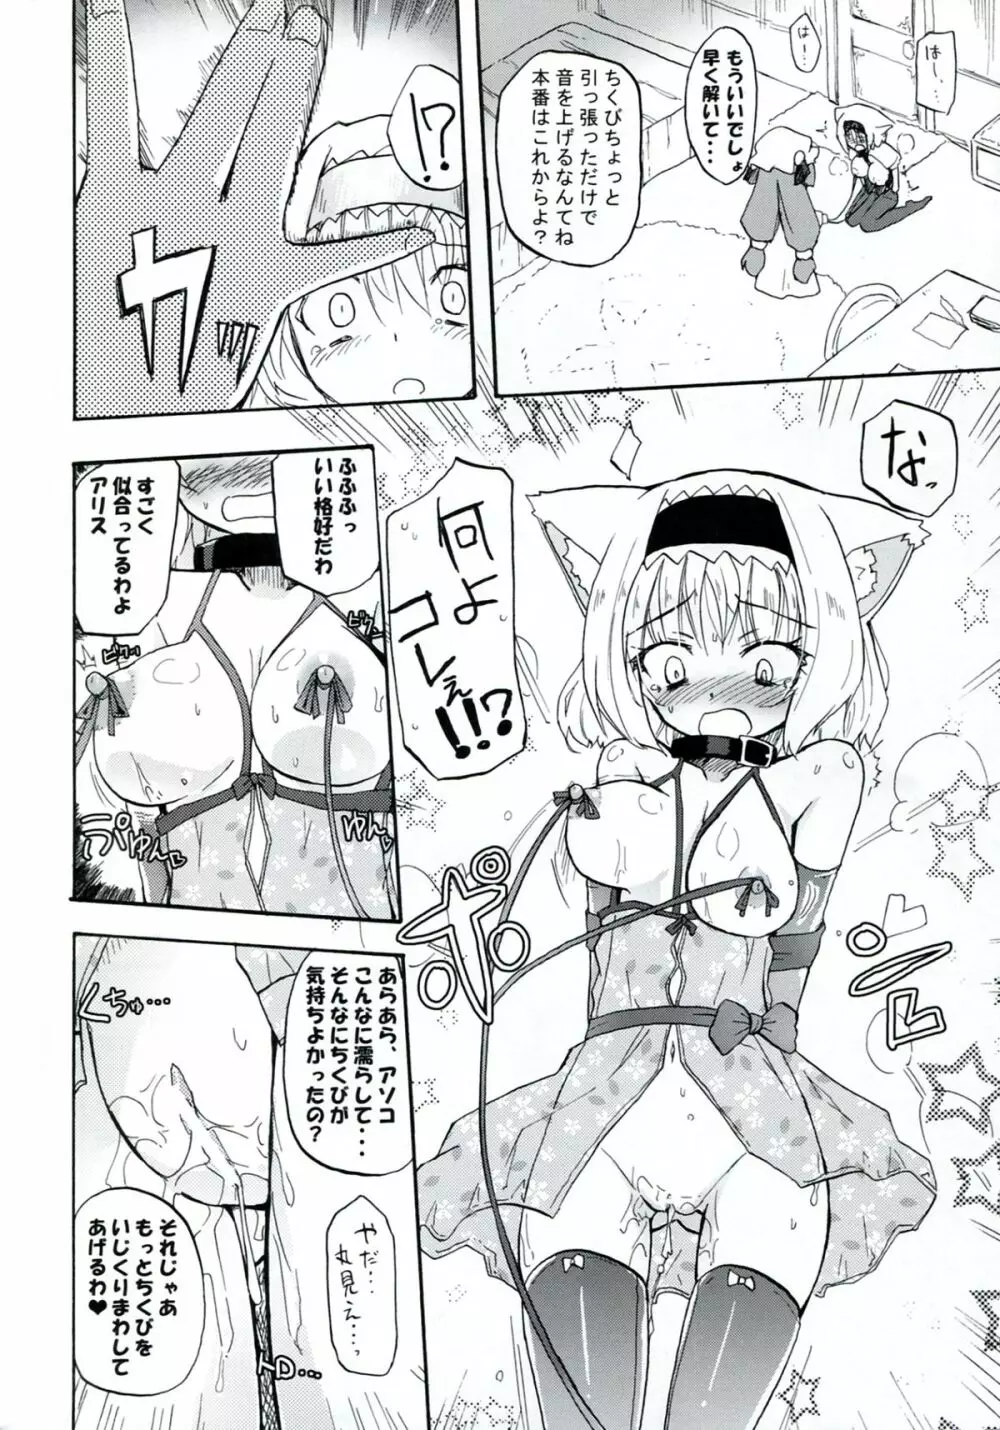 Homuraya Milk ★ Collection 2 16ページ